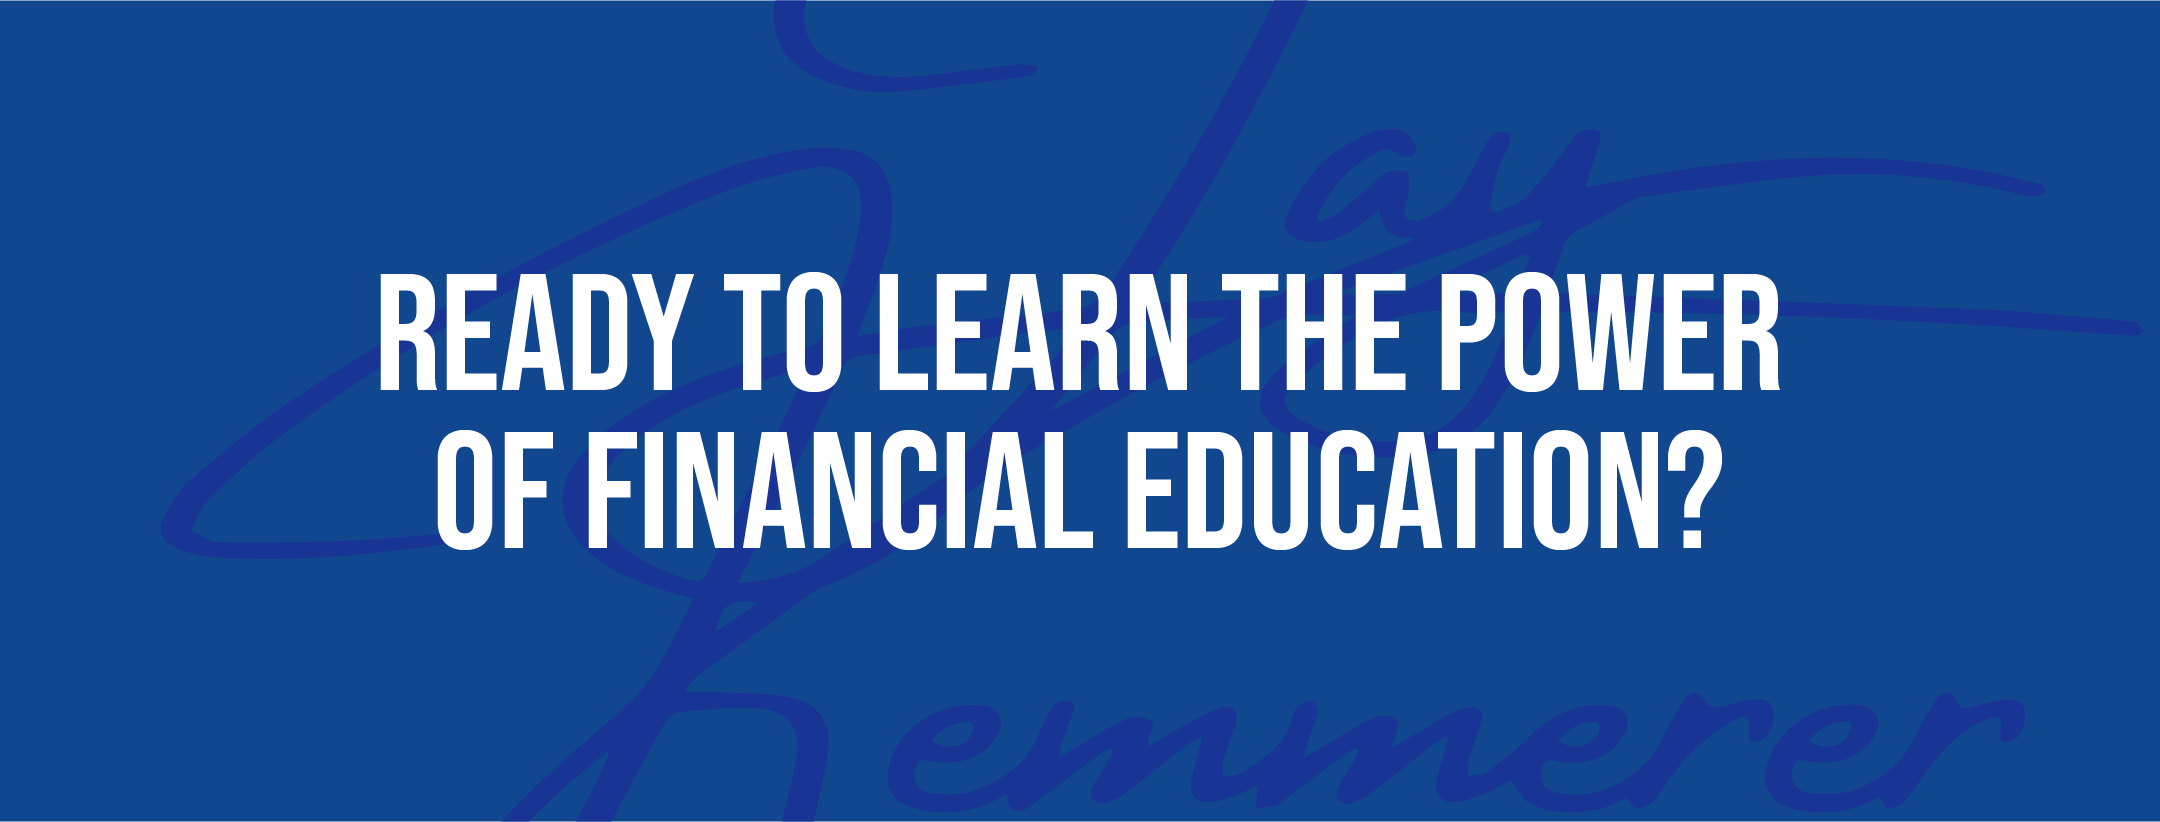 Jay Kemmerer Financial Education Resources